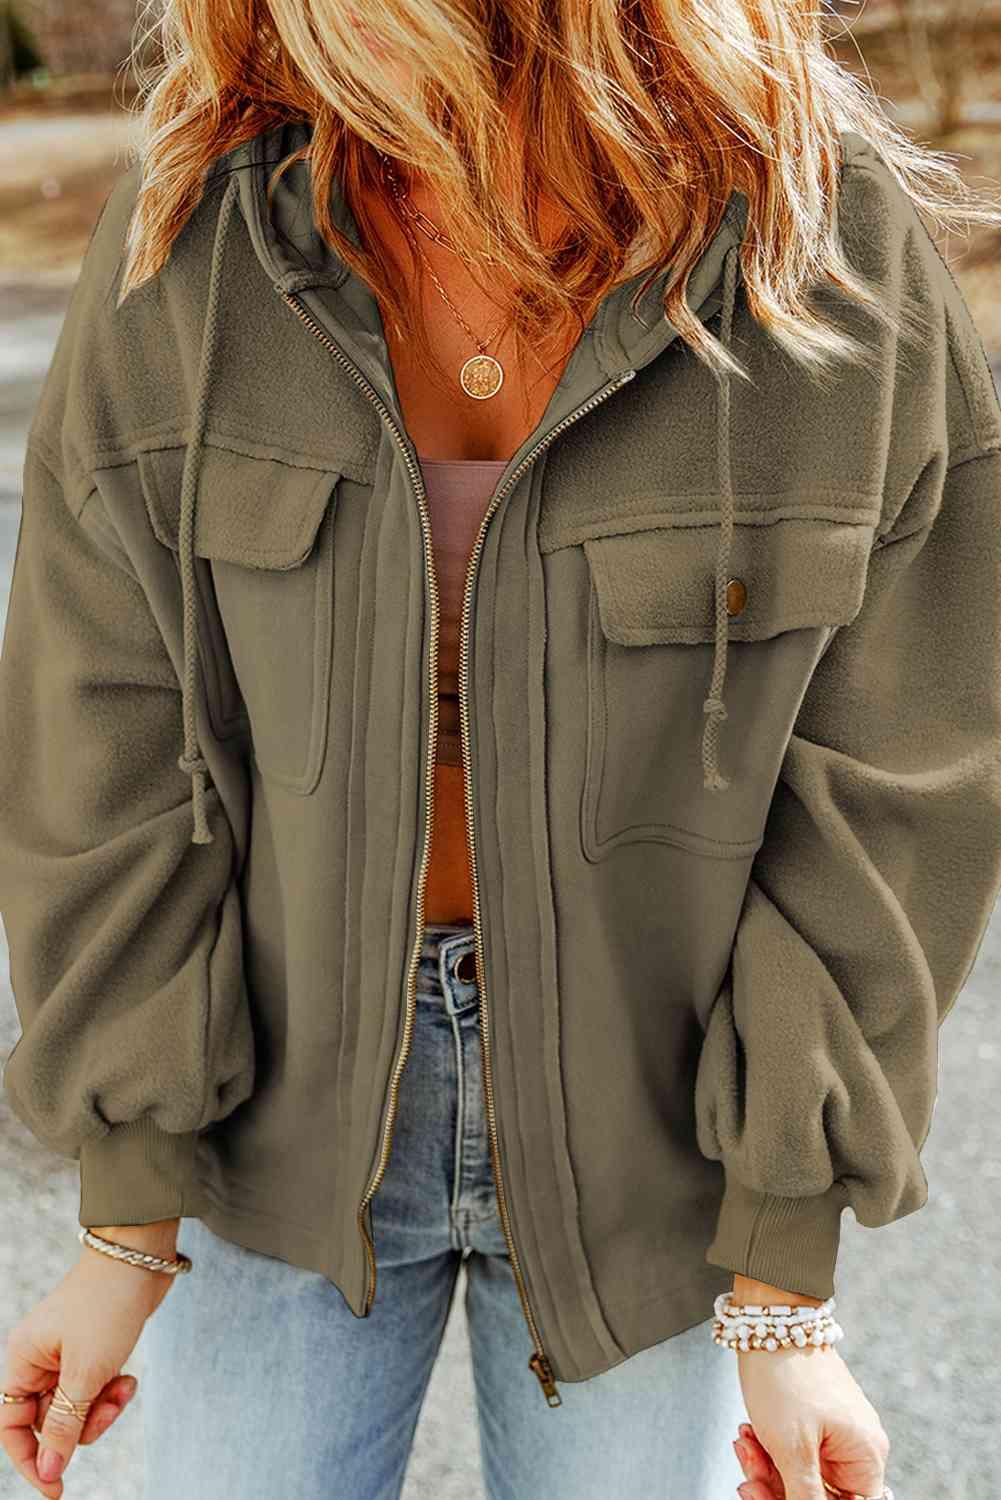 Zip-Up Drawstring Hooded Jacket - Lab Fashion, Home & Health